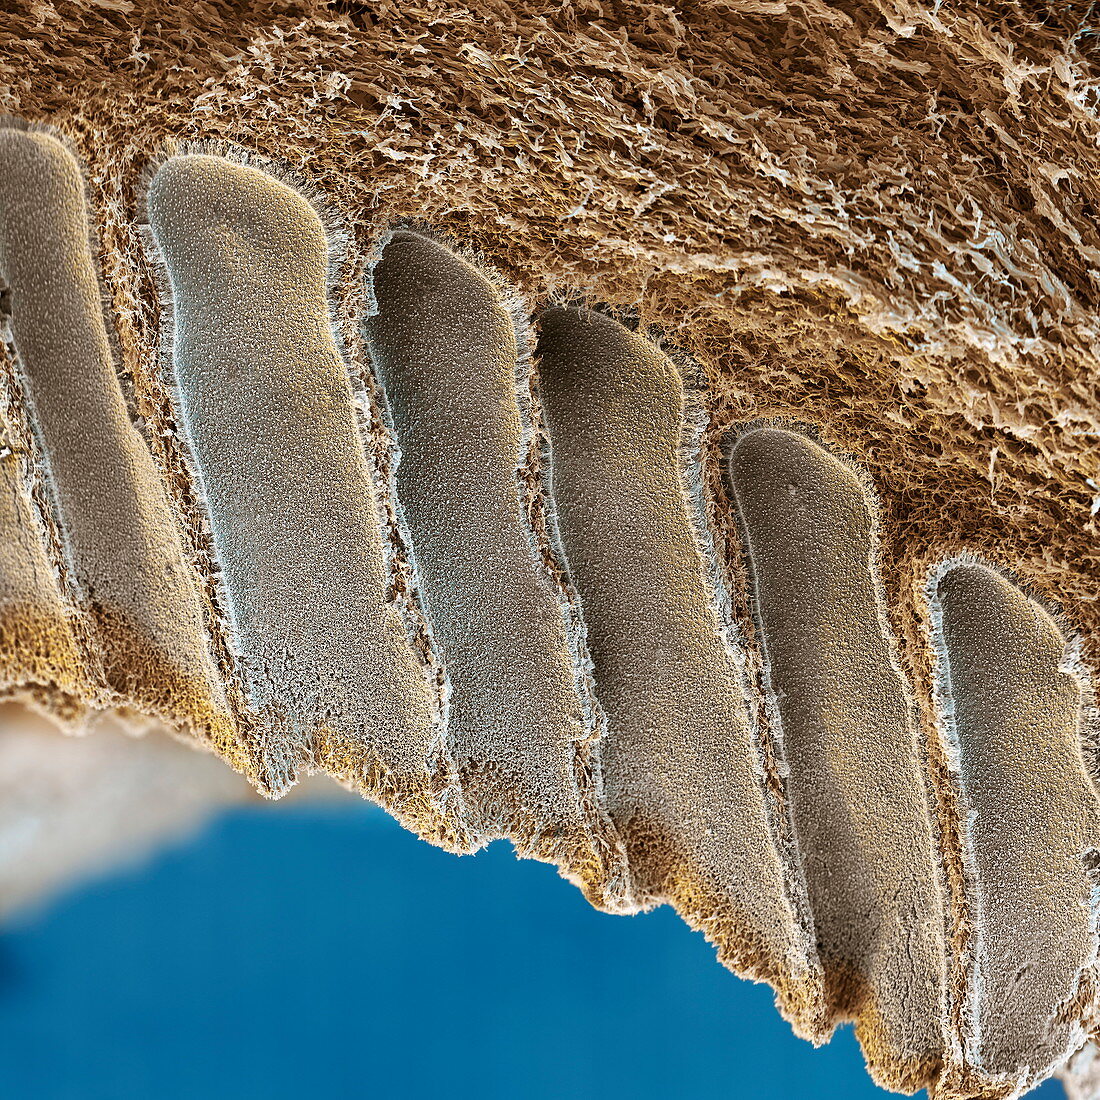 Gills of a bracket fungus, SEM